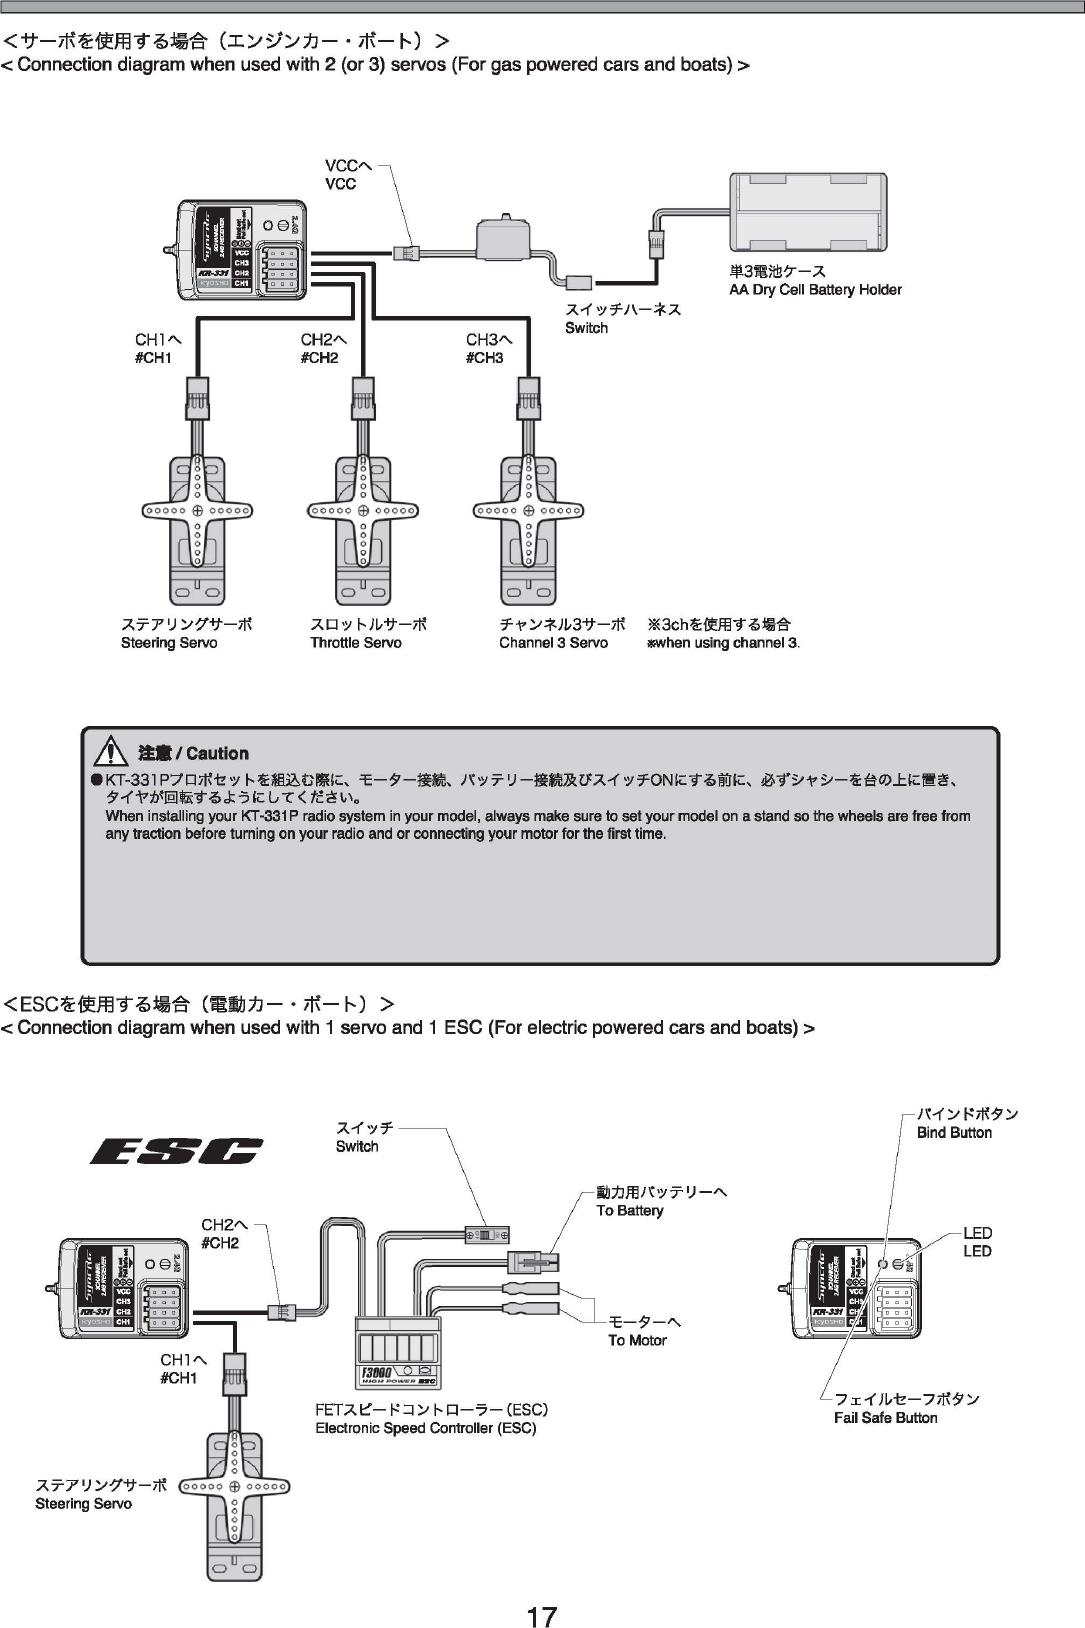 &lt;吵-ïf{苍使用亨苍塌合(工&apos;./:;/二J力一.ïf{一卡)&gt; &lt; Connection diagram when used with 2 (or 3) servos (For gas powered cars and boats) &gt; 又7&quot;Yυ二竹f吵-ïI号Steering Servo A四ICautlonvcc叫VCC 又口、y卜}I，..甘-ïKThrottle Servo 又-(&apos;:17八-本又Switch 7节二/;本}1，..3廿-ïK※3ch奄使用亨磊塌合Channel 3 Servo审whenusing channel 3 • KT-33 1 P:1口ïK-t?&apos;;1卜毫钮这ù固自忆、毛-夕-接章在、1\&apos;:1予υ-接毓及σ又-(‘~70N忆1&quot;.:þ前忆、必苦&apos;呈，乍呈/-奄台φ上忆匮吉、夕1&apos;;&gt;护回耘T.:þJ:&apos;5Ii:VC&lt; tèð~\o When installing your KT.331 P radio syslem in your model, always make sure to sel your model on a stand so the wt晴elsare free from any traction before tuming on your radio and or∞nnecting your motor for the first time. &lt;ESC奄使用亨~揭合(雷勤力一•iI号一卡)&gt; &lt; Connection diagram when used with 1 servo and 1 ESC (For electric powered cars and boats) &gt; 6:111: 又 予yυ二户夕廿-ïKSteering Servo 又-(γ7Switch 17 E抽力用1\&apos;:17υ-^To Battery 毛-夕-^ToM口t口r1\1&apos;~~ïI号夕二JBind Button LED LED 7 工l&apos;}1，..-t?-7ïK夕 νFailSafe B川ton